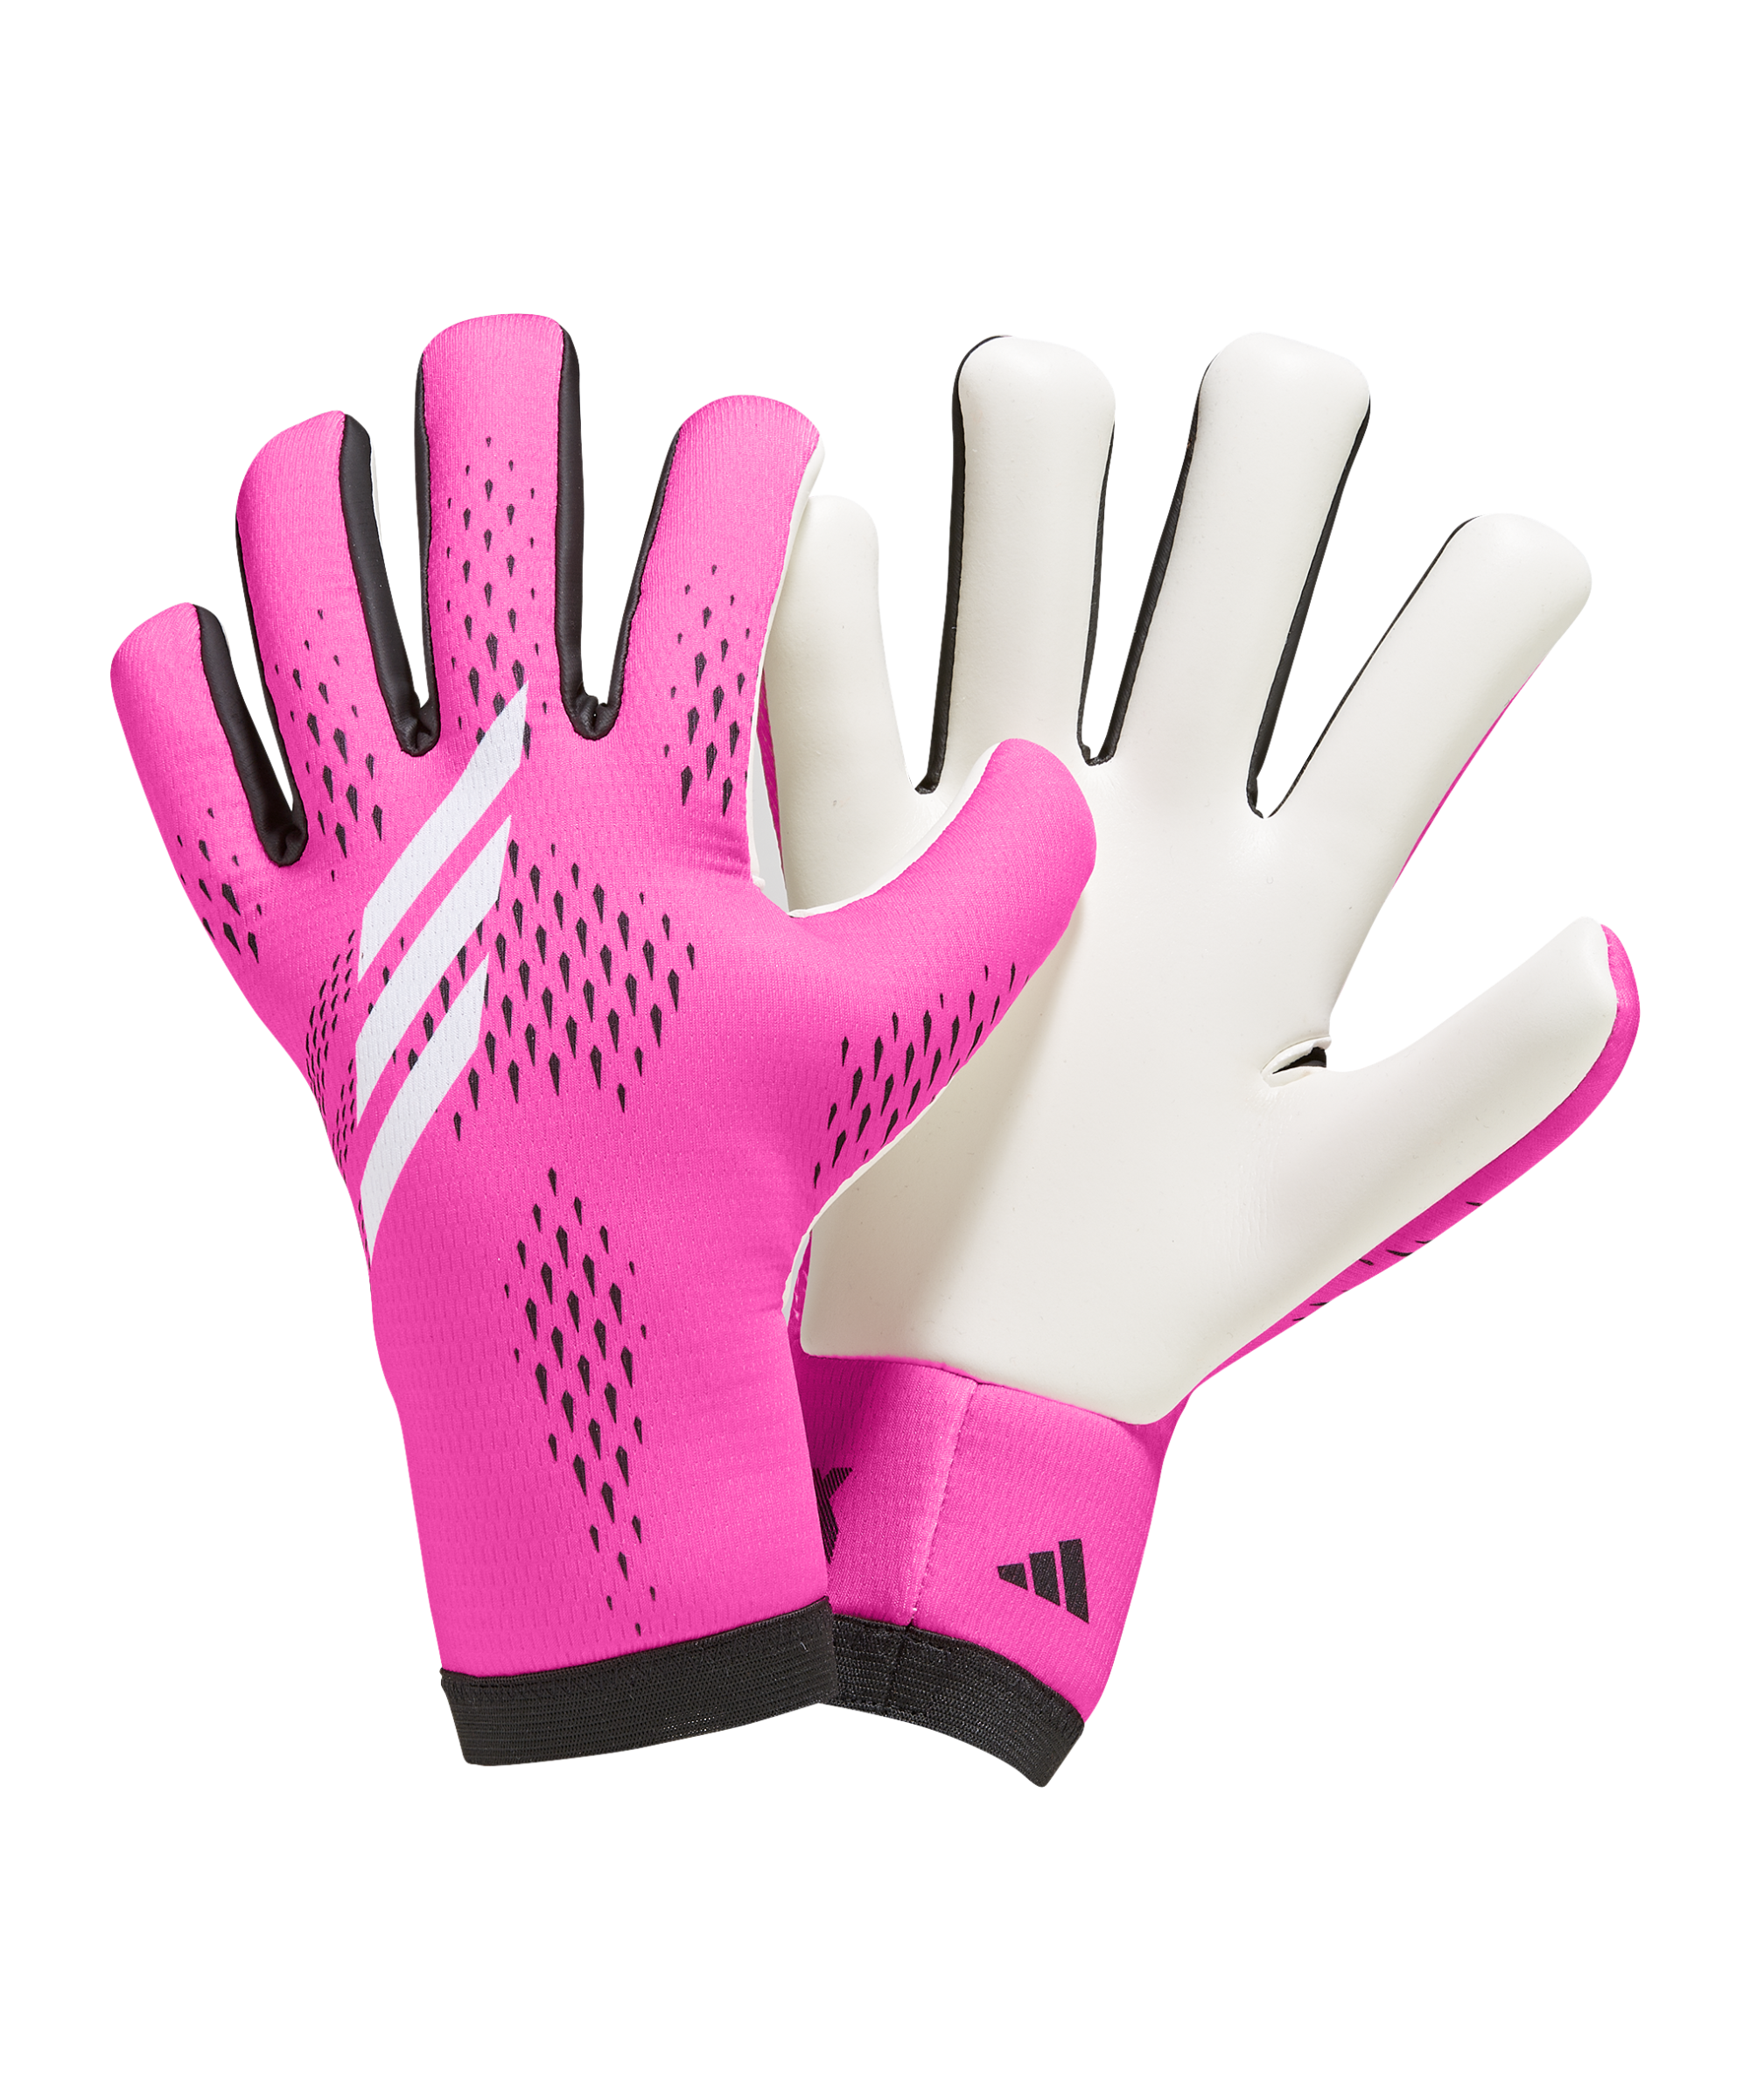 Adidas Youth x League Goalkeeper Gloves - Pink-White-Black, 4